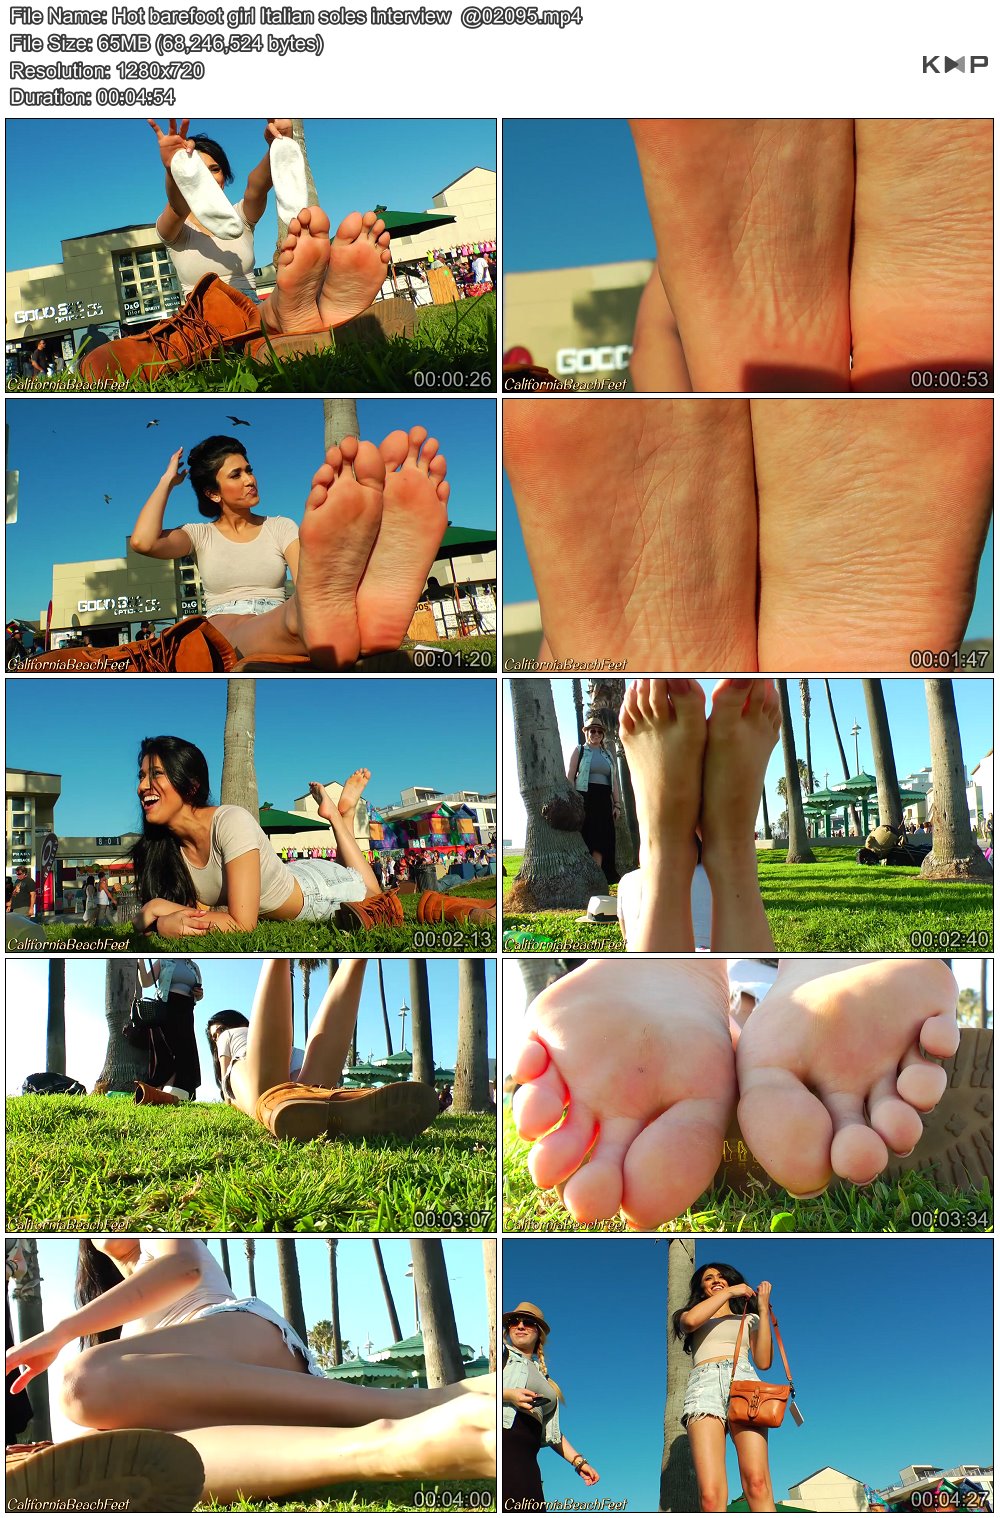 Hot barefoot girl Italian soles interview  @02095.JPG